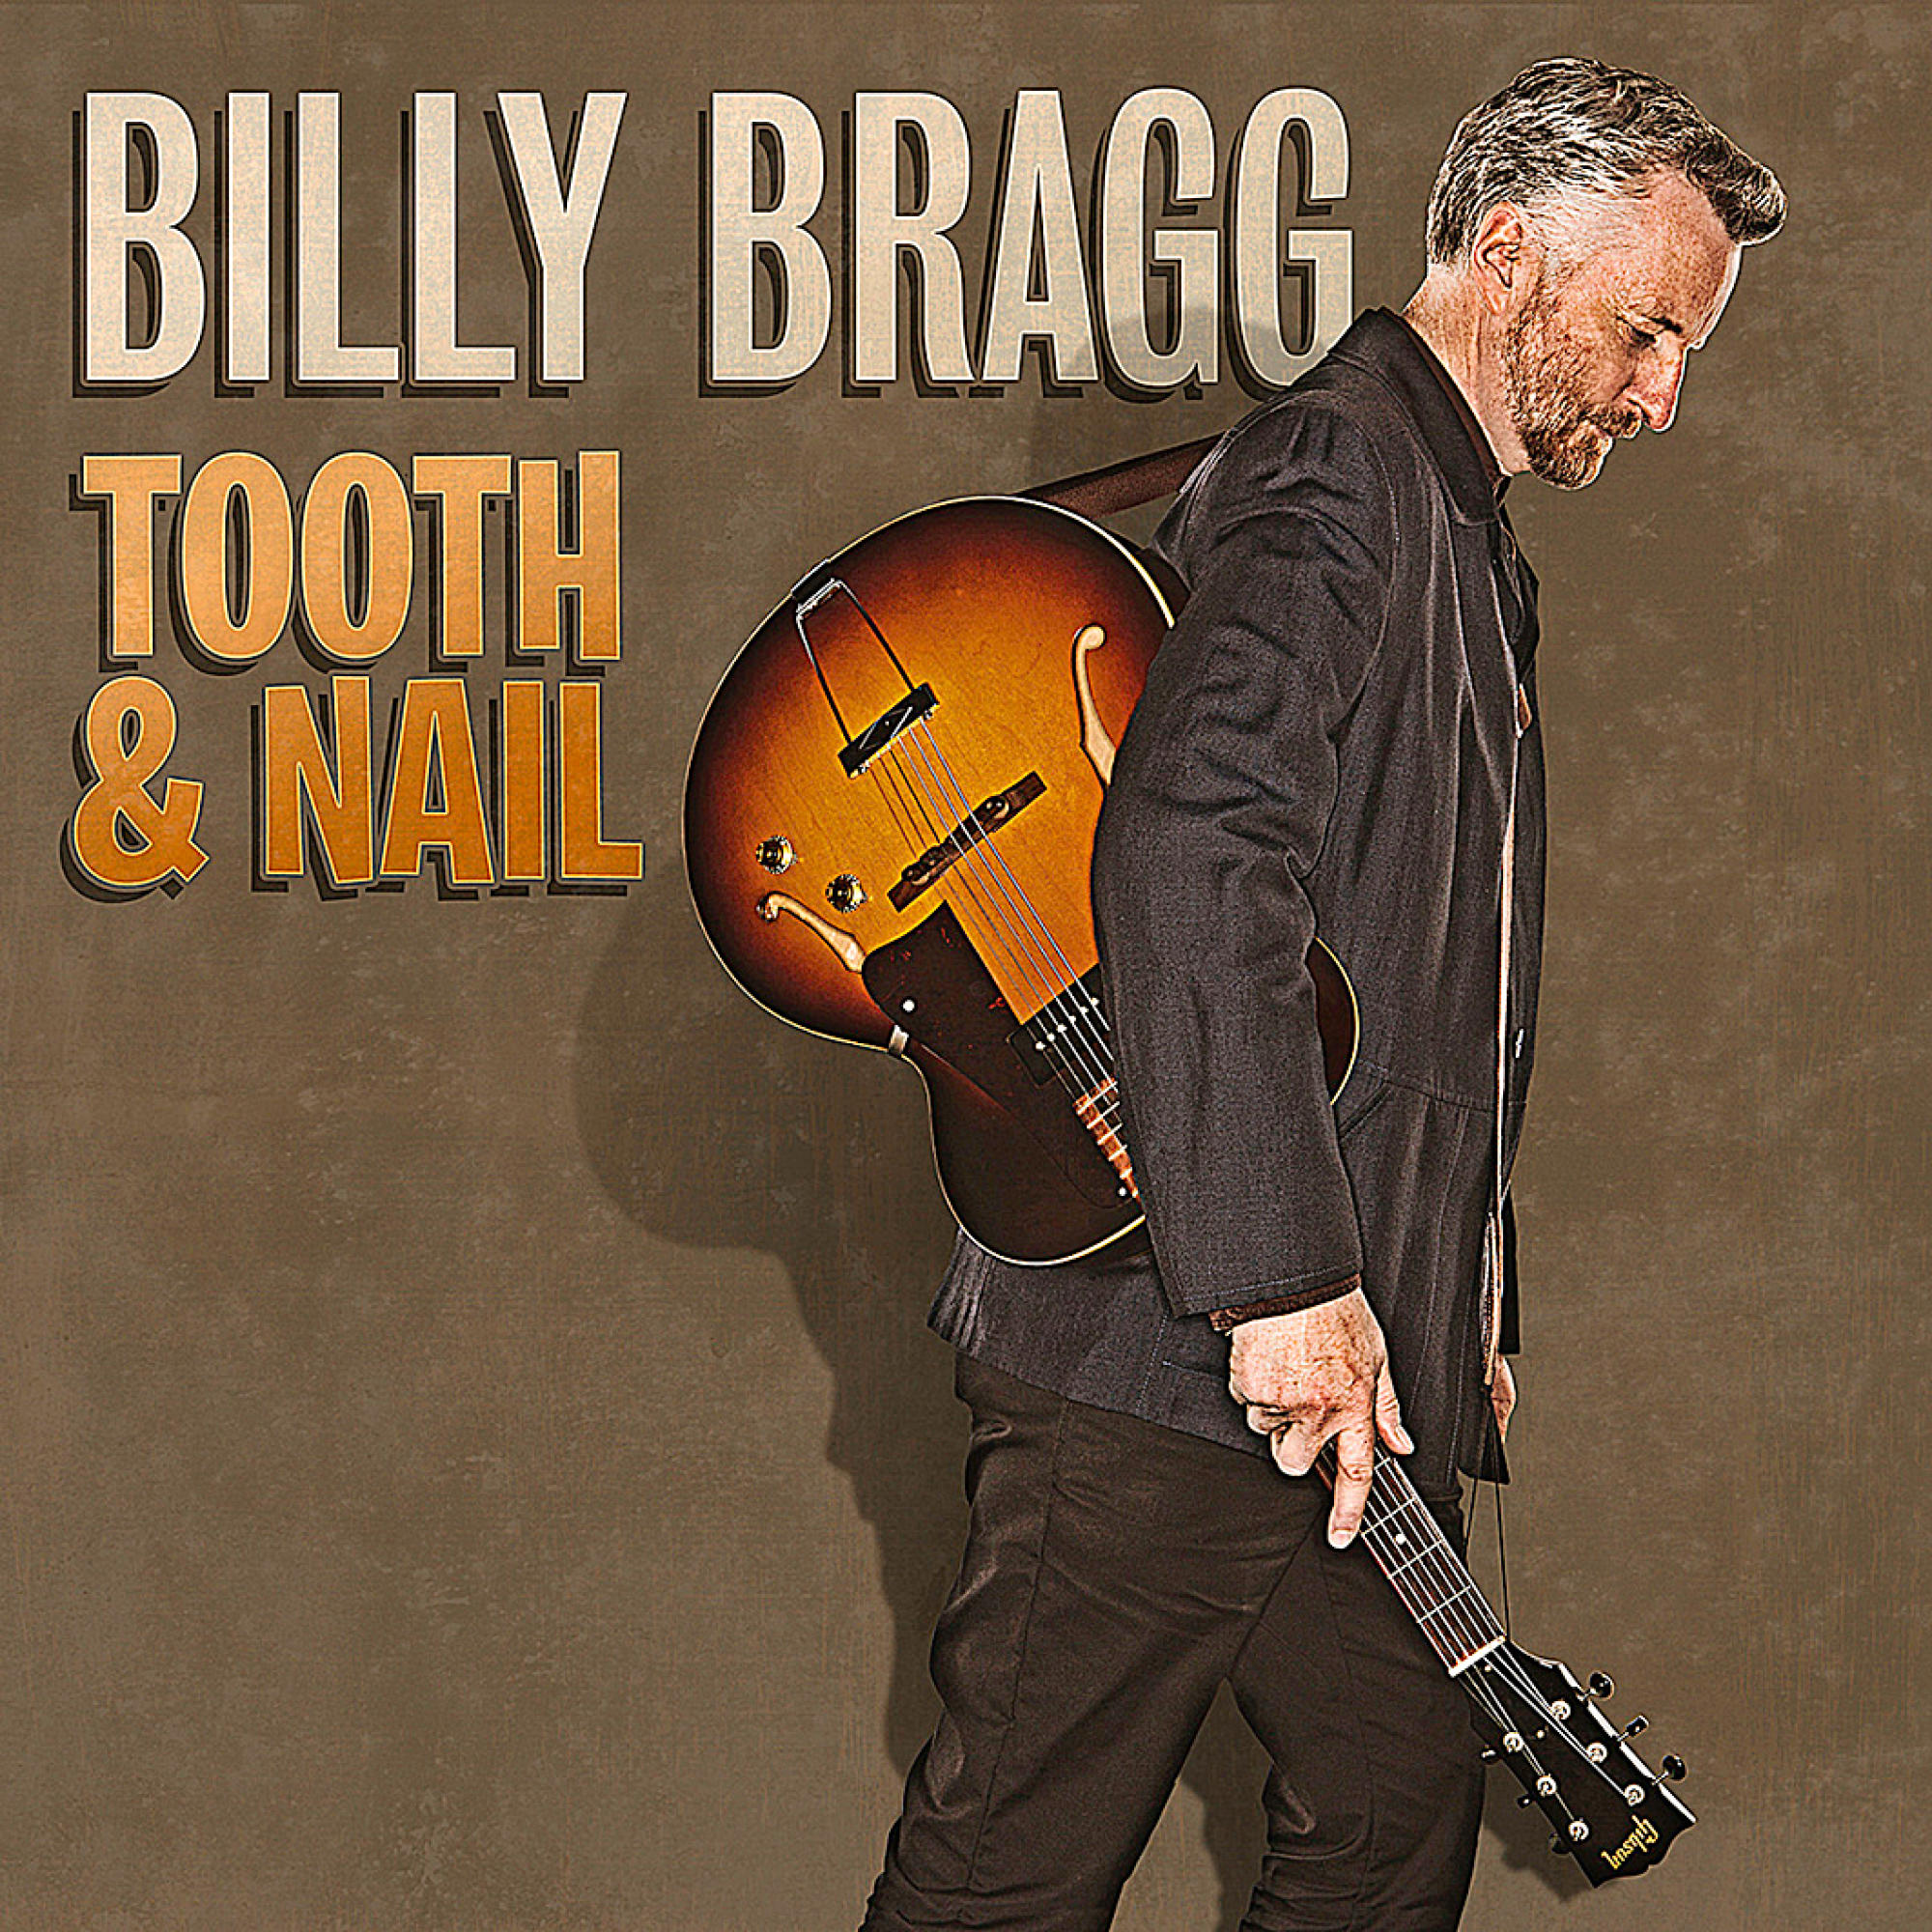 (CD) Billy - & - Nail Bragg Tooth